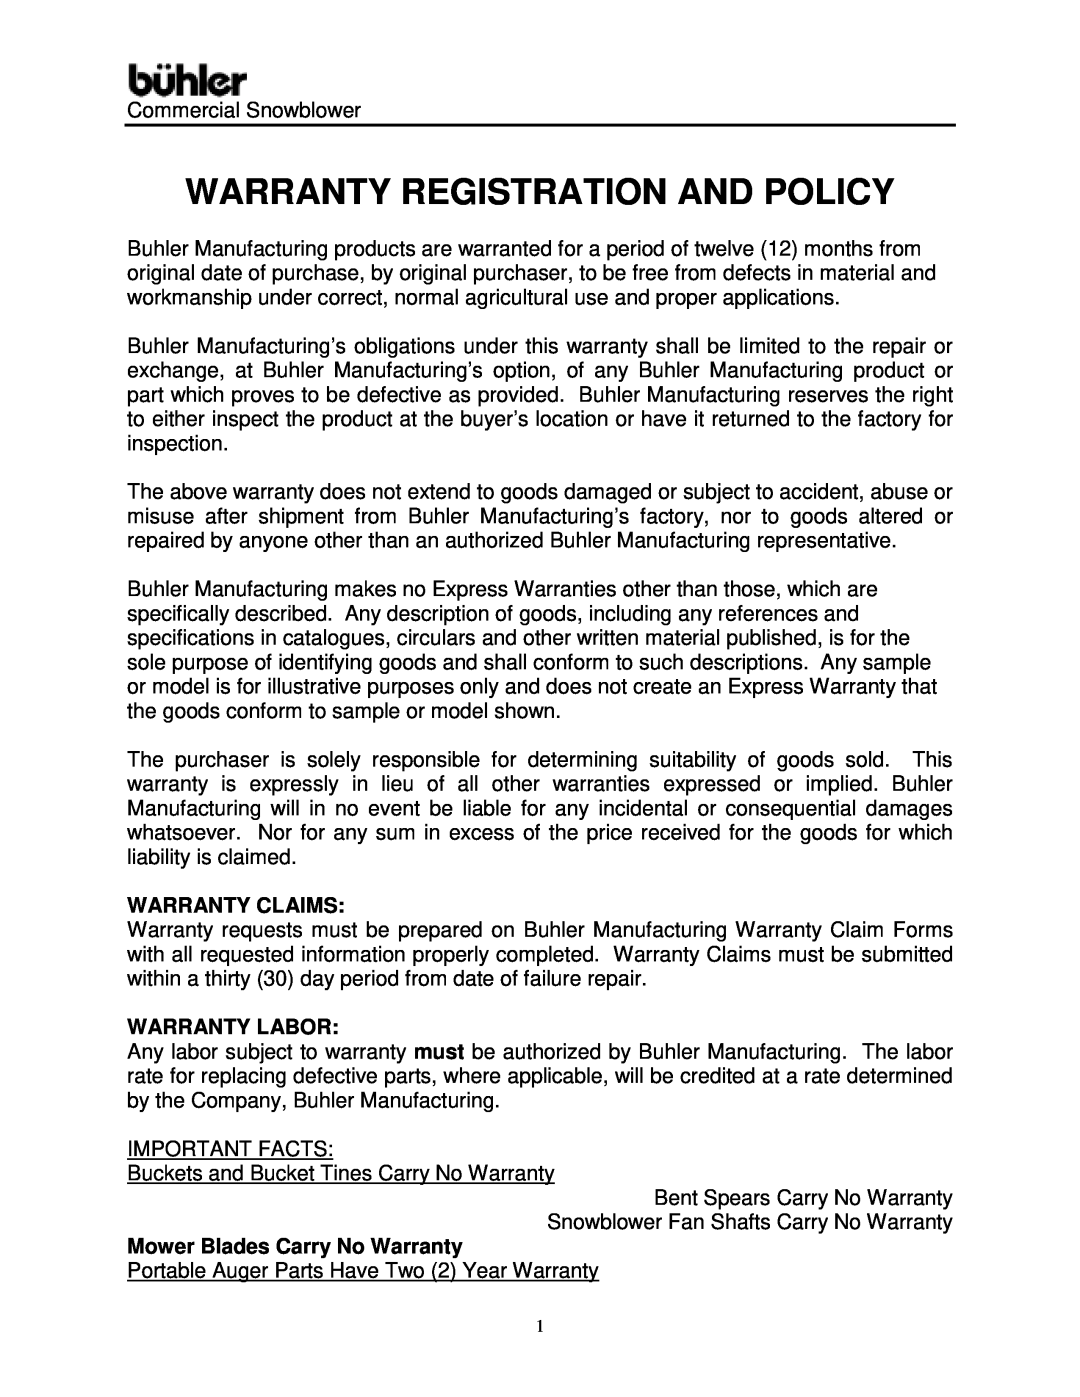 Buhler Commercial Snowblower warranty Warranty Registration And Policy, Warranty Claims, Warranty Labor 